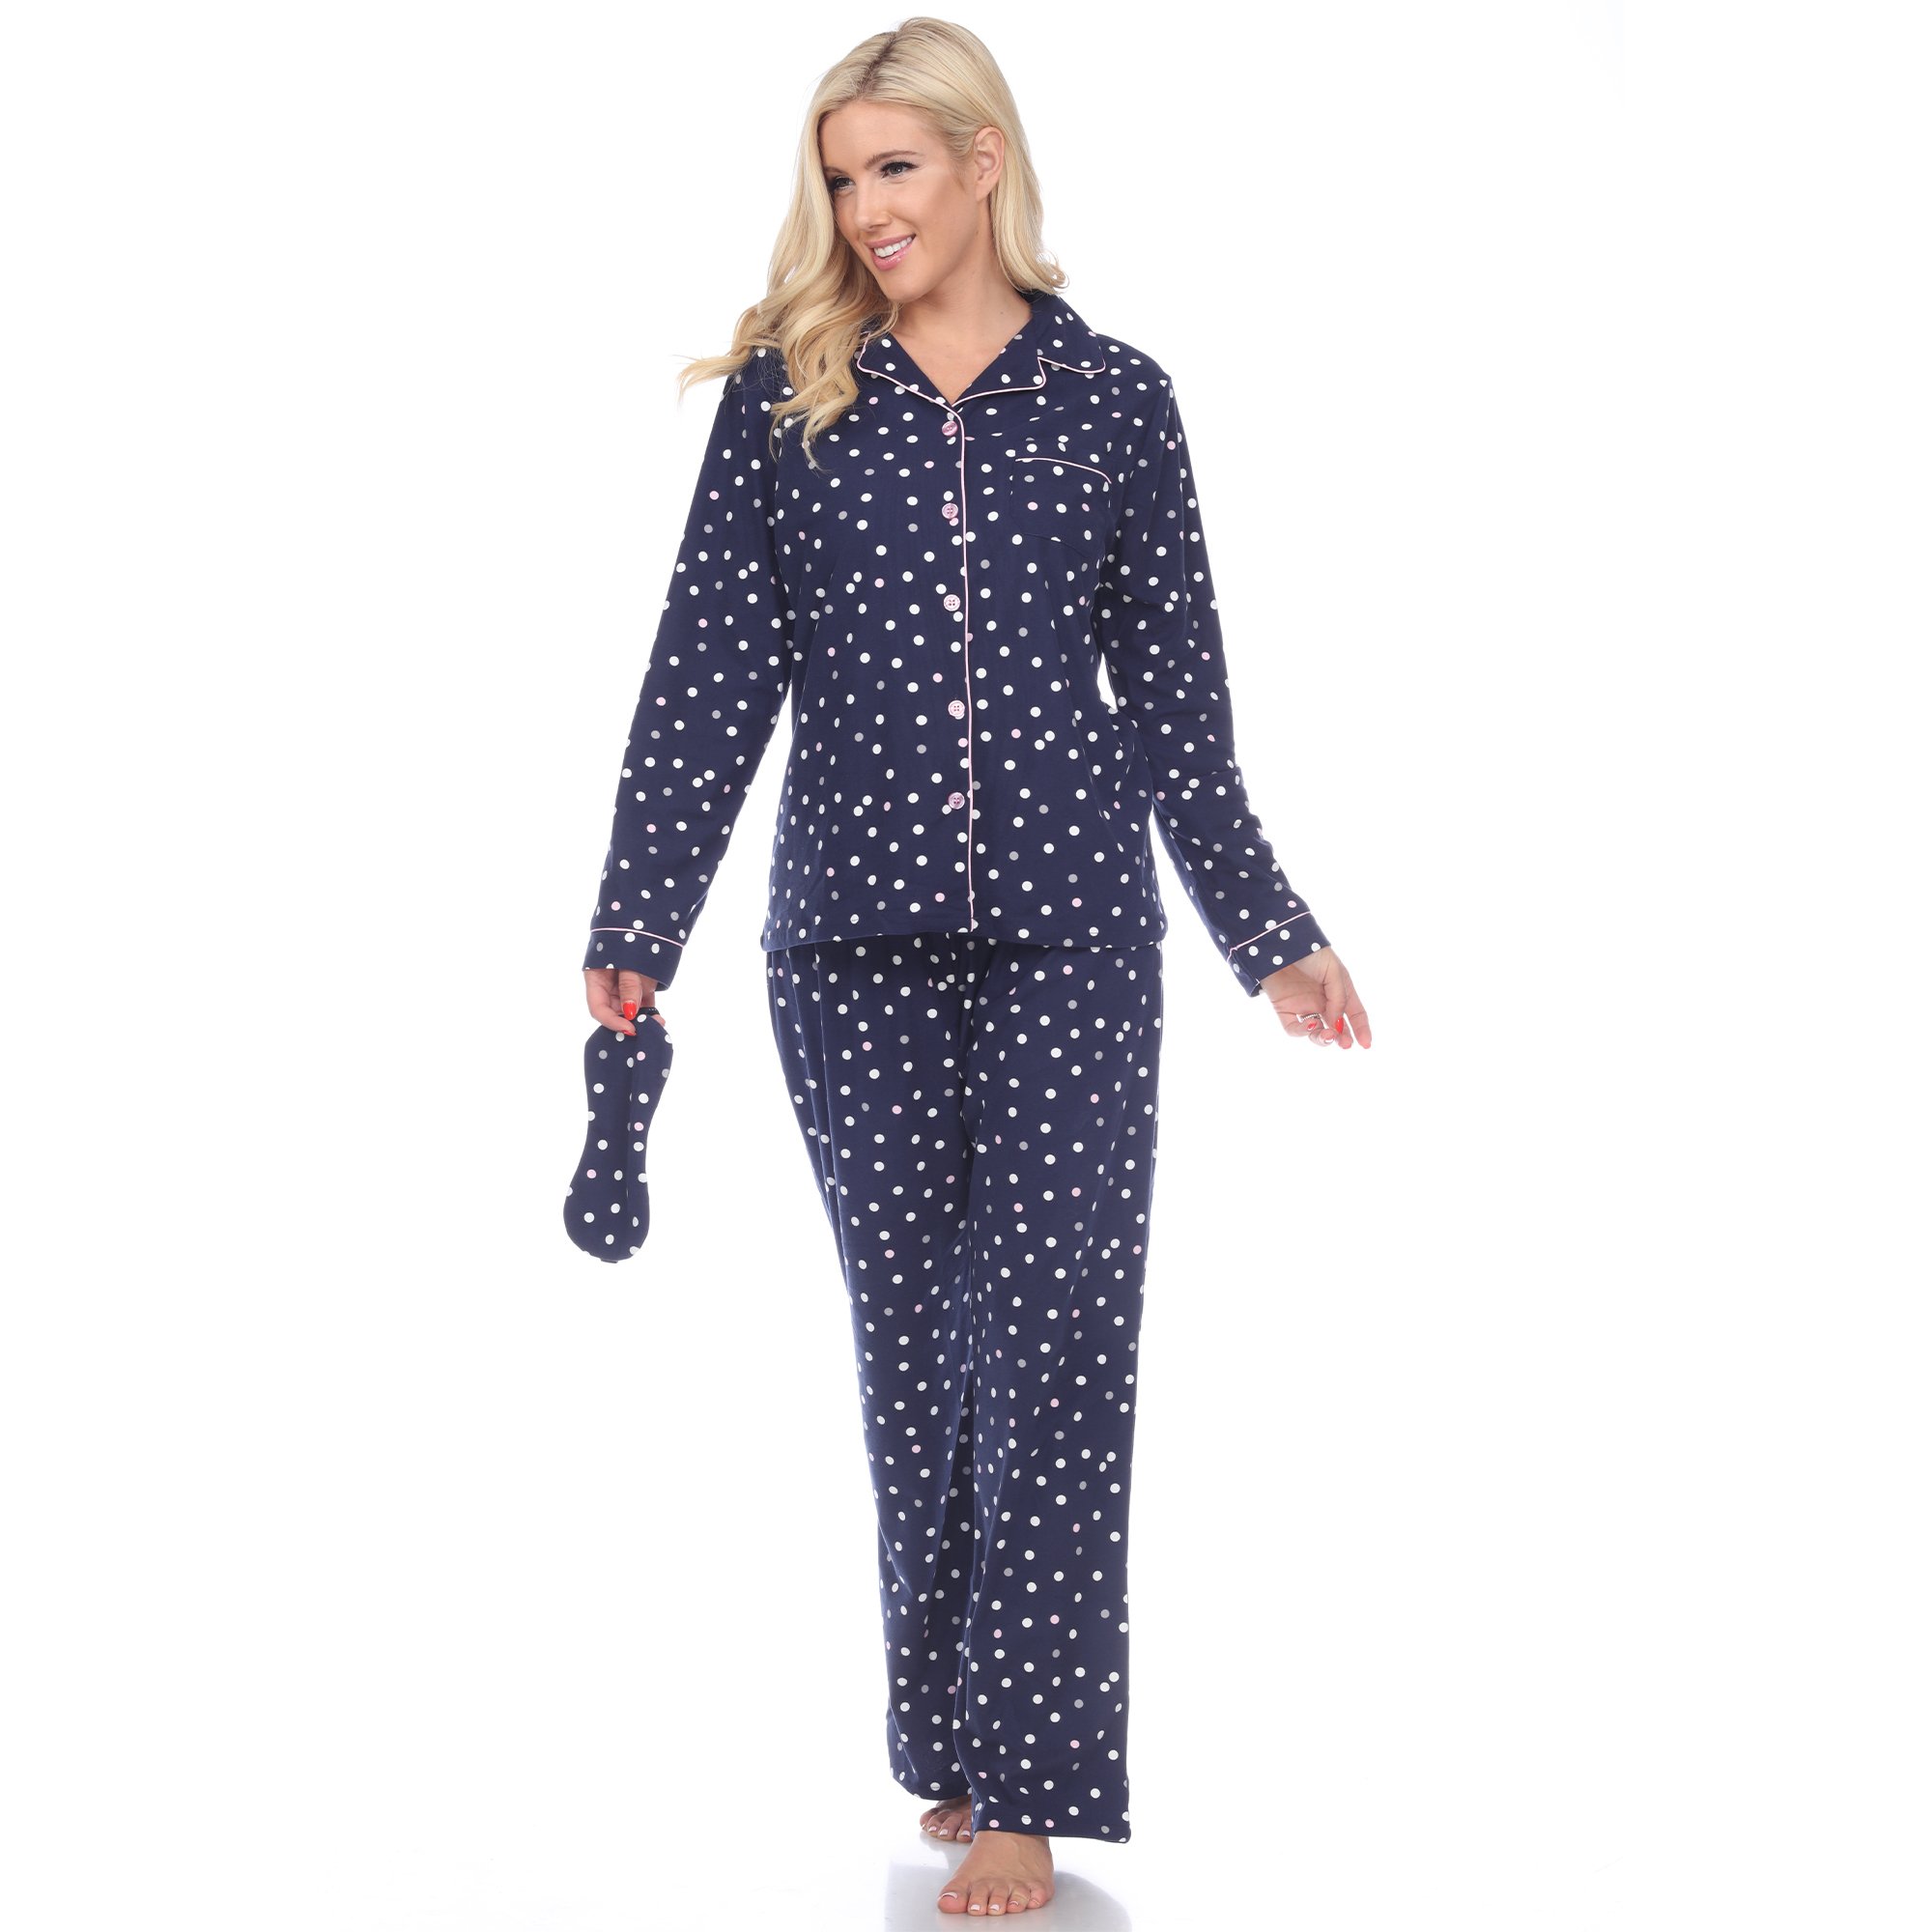 White Mark Women's Three-Piece Pajama Set - Navy Polka Dots, 1X